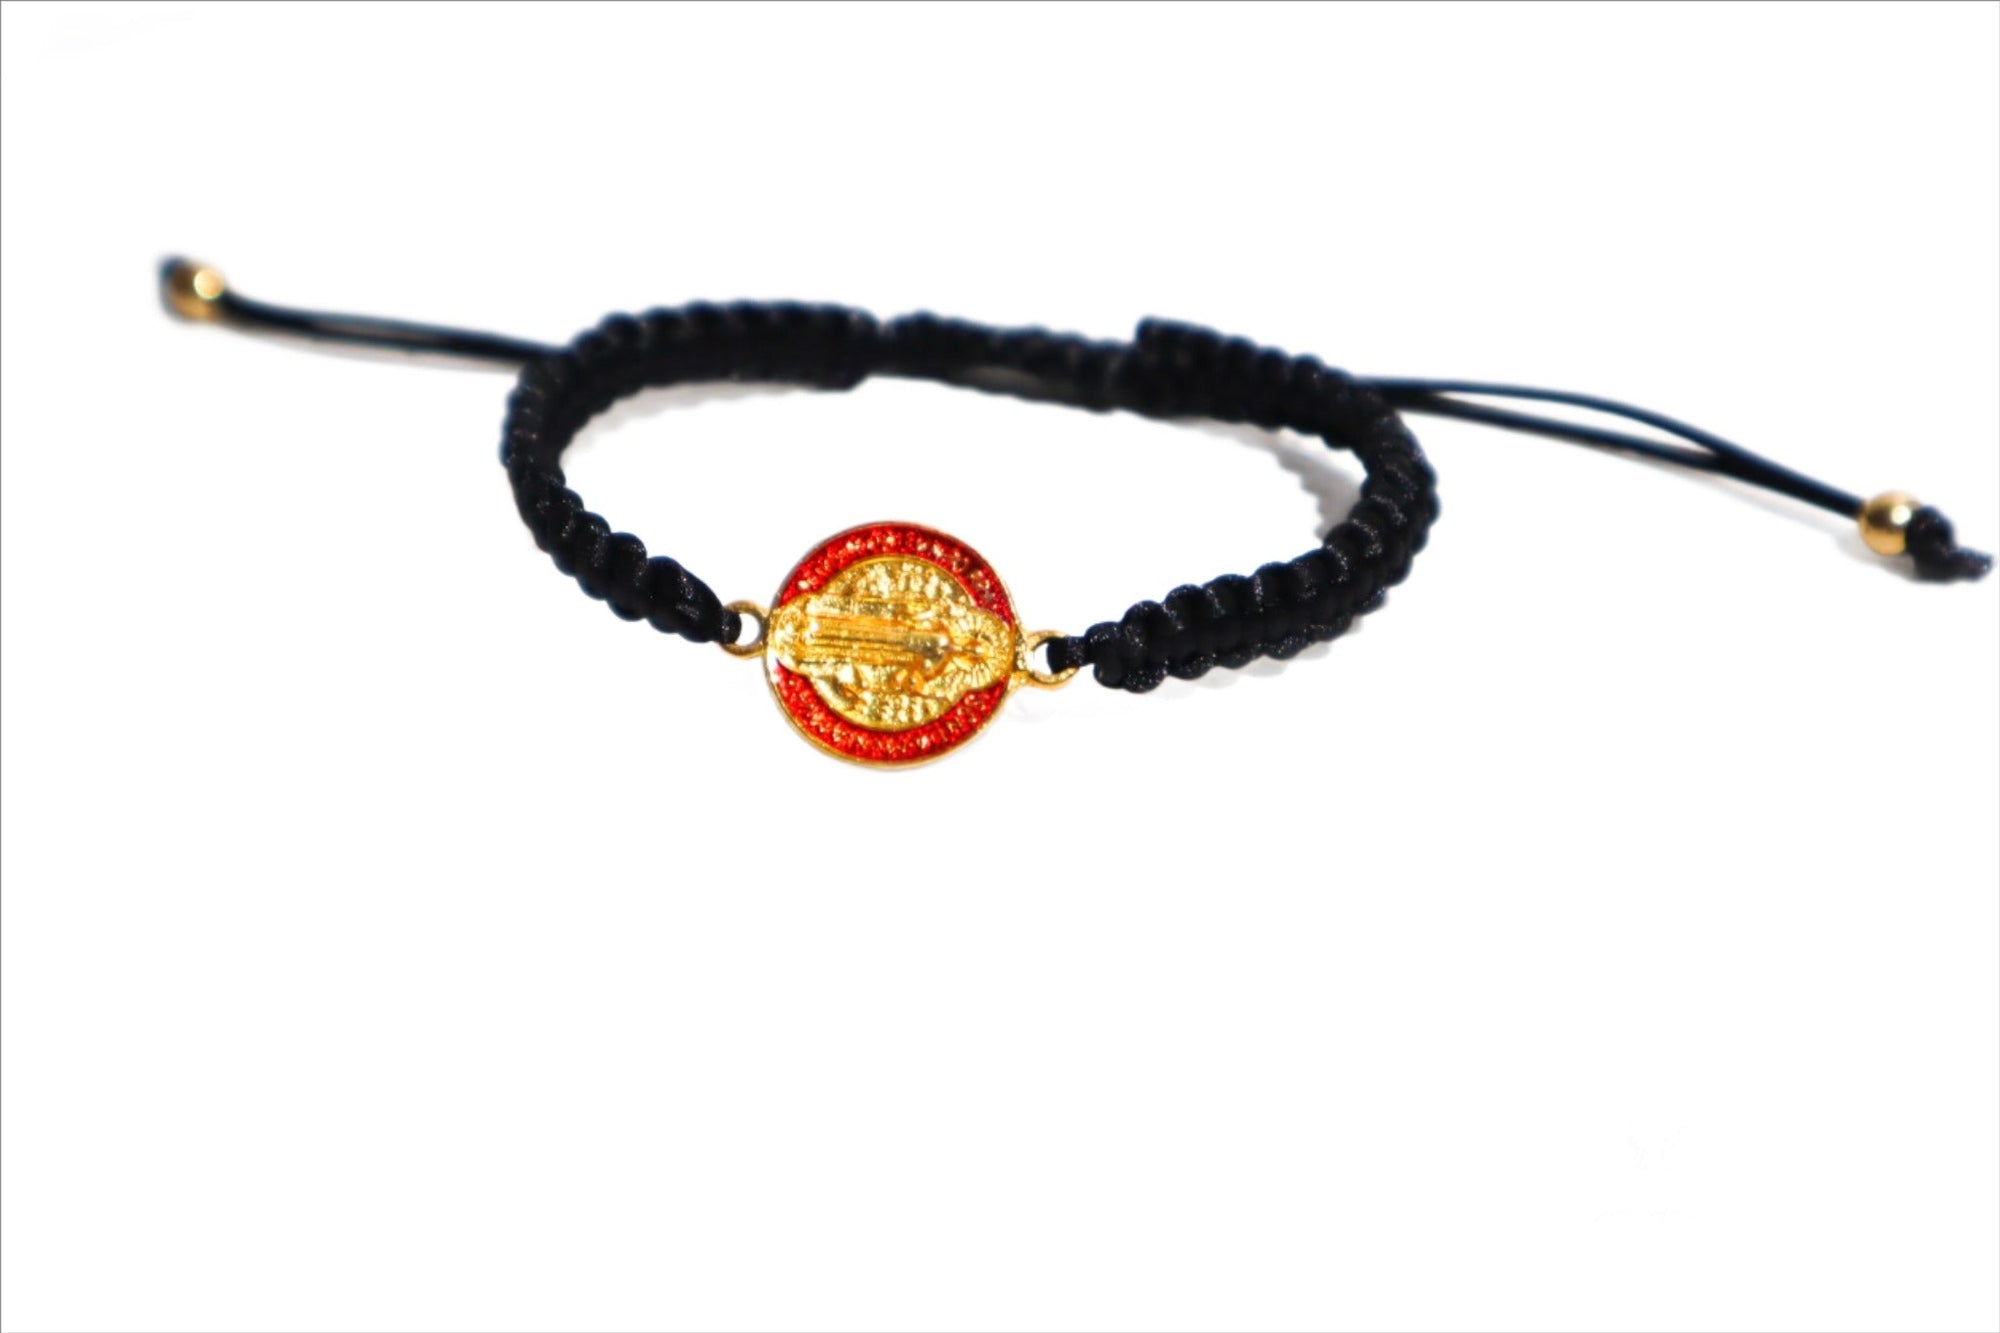 Encapsulated Saint Benedict Medal Protection Bracelet - Shop Cosmic Healing